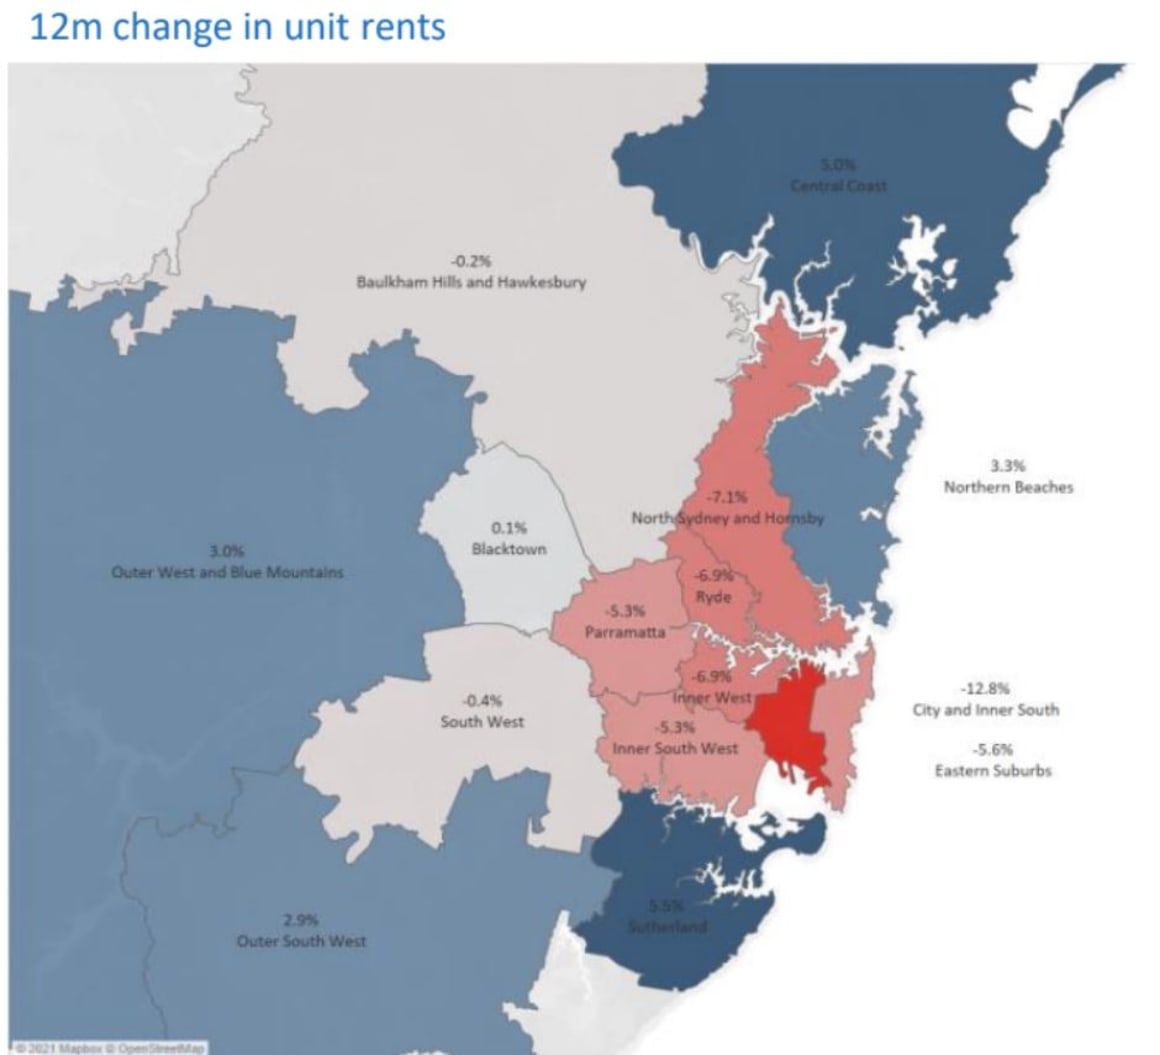 Sydney unit rental prices plummet, barely $8 ahead of Canberra